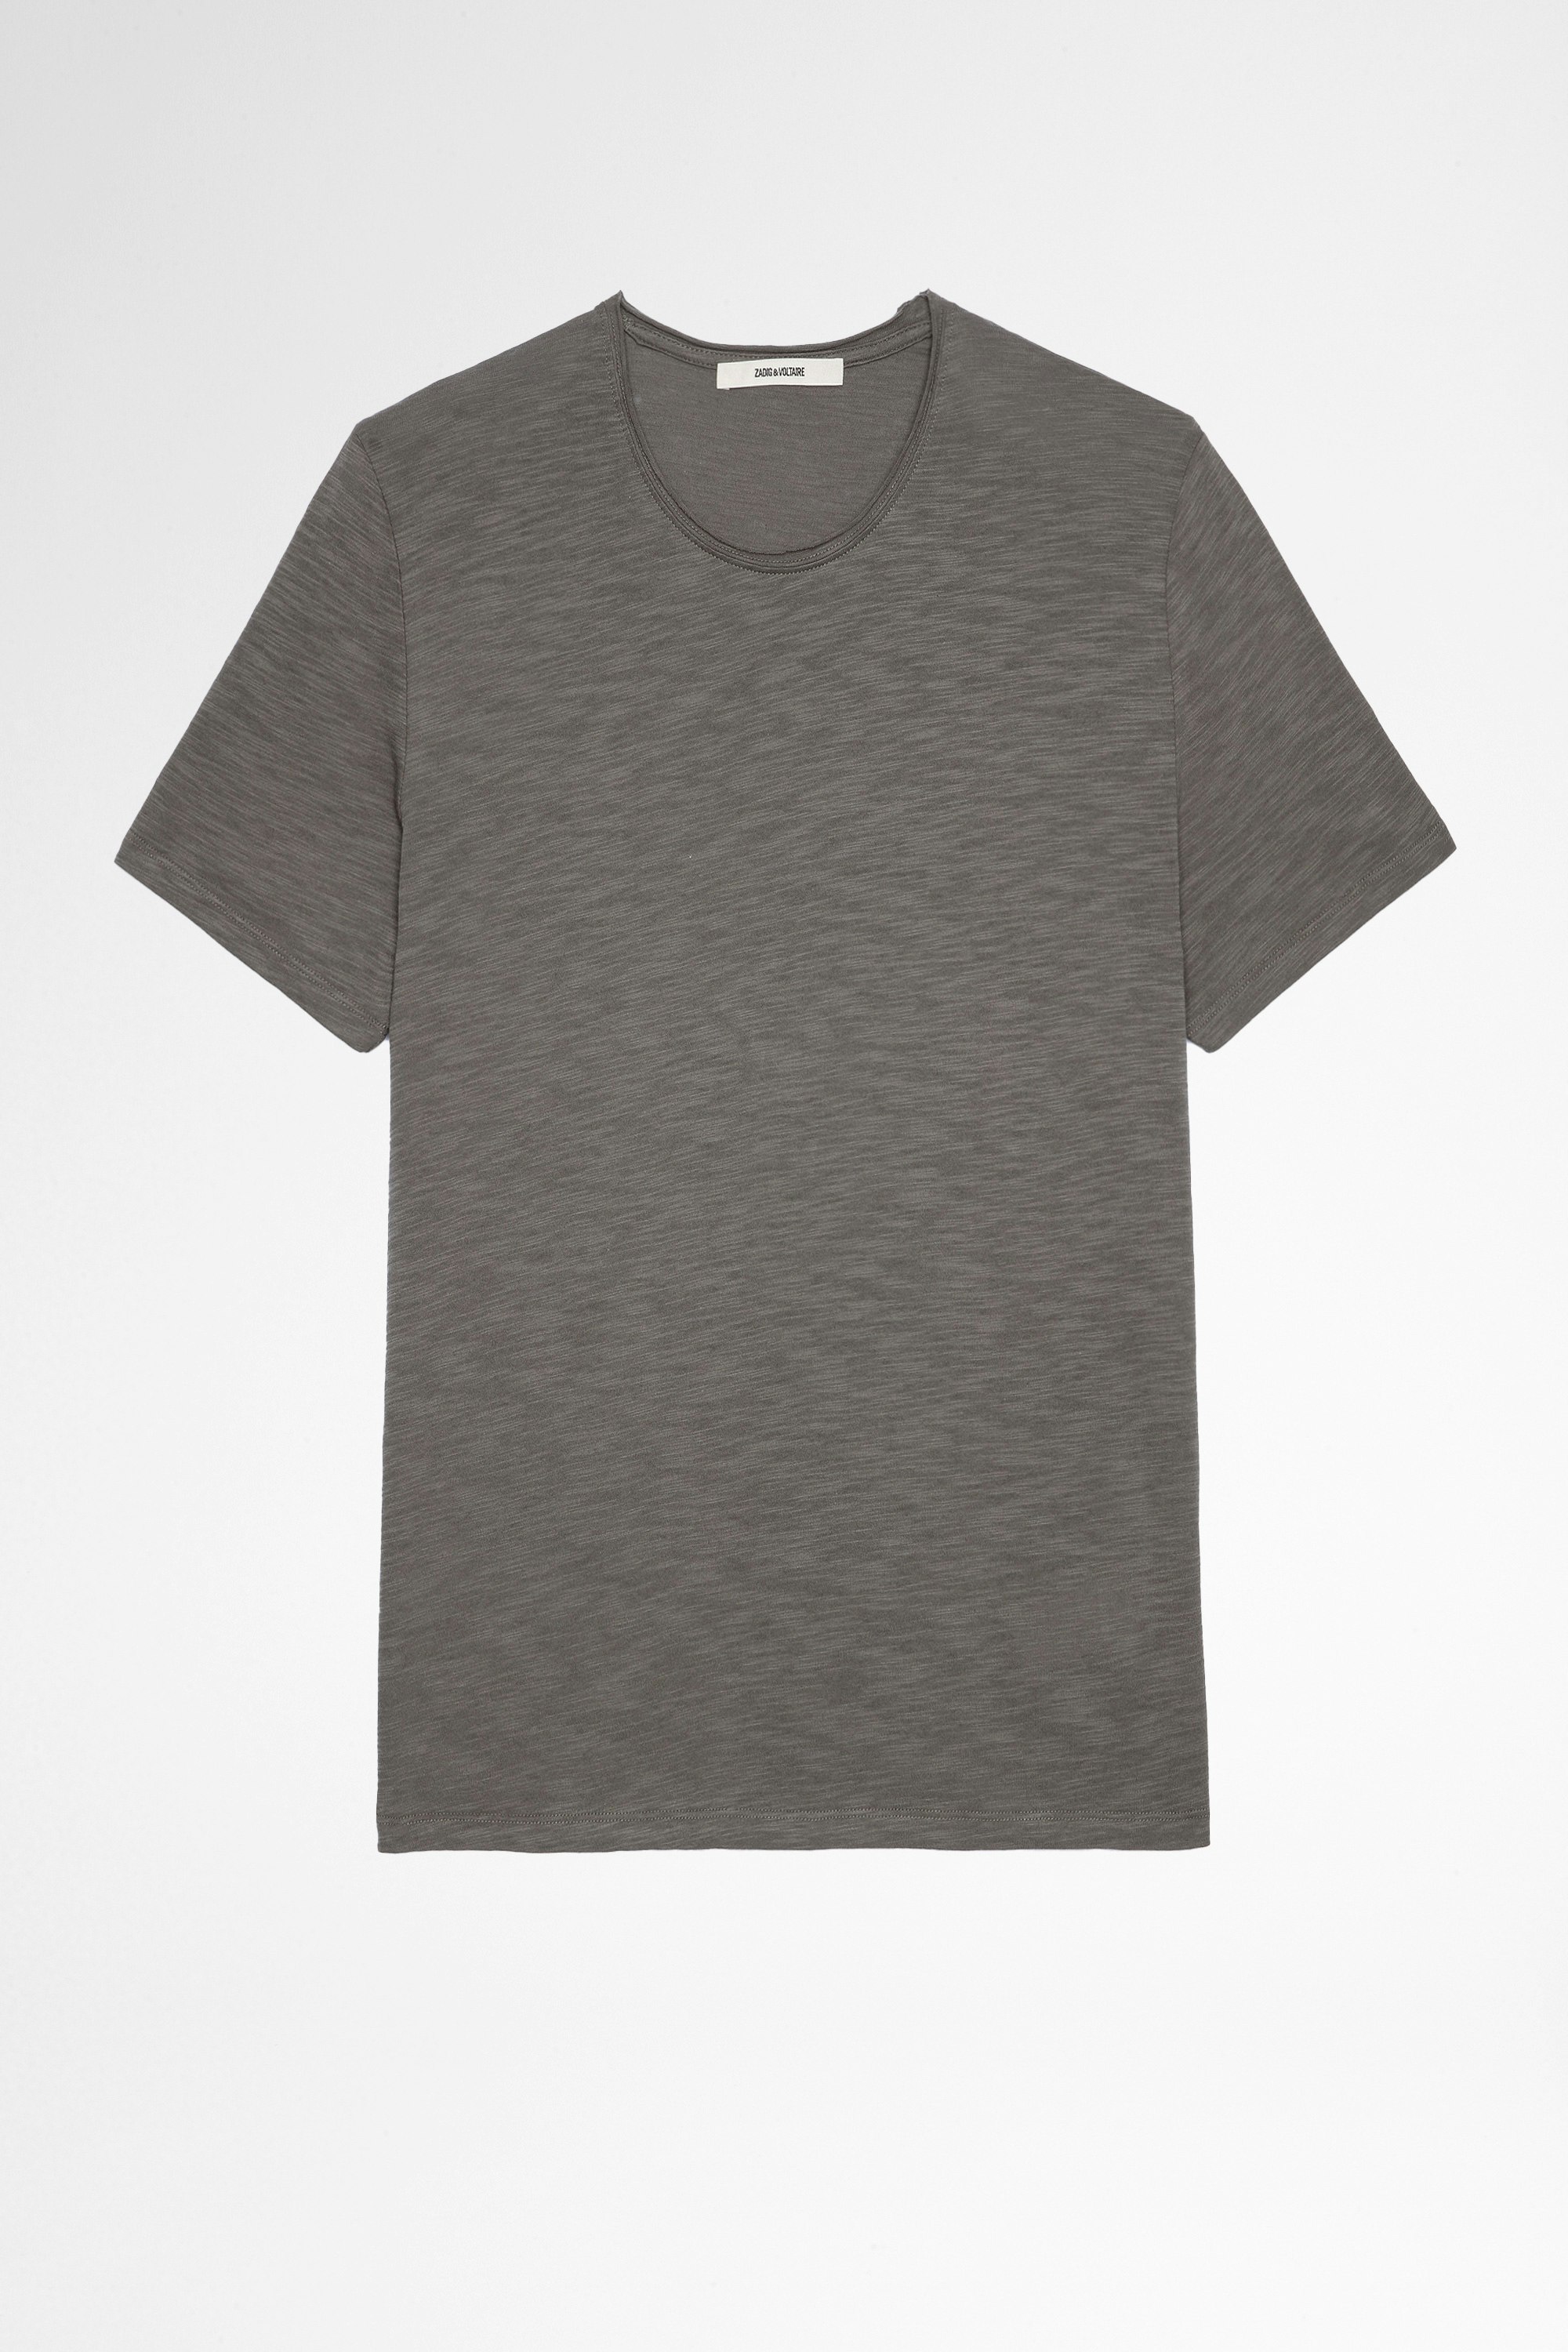 Camiseta Toby Flamme  Camiseta gris de algodón de manga corta para hombre